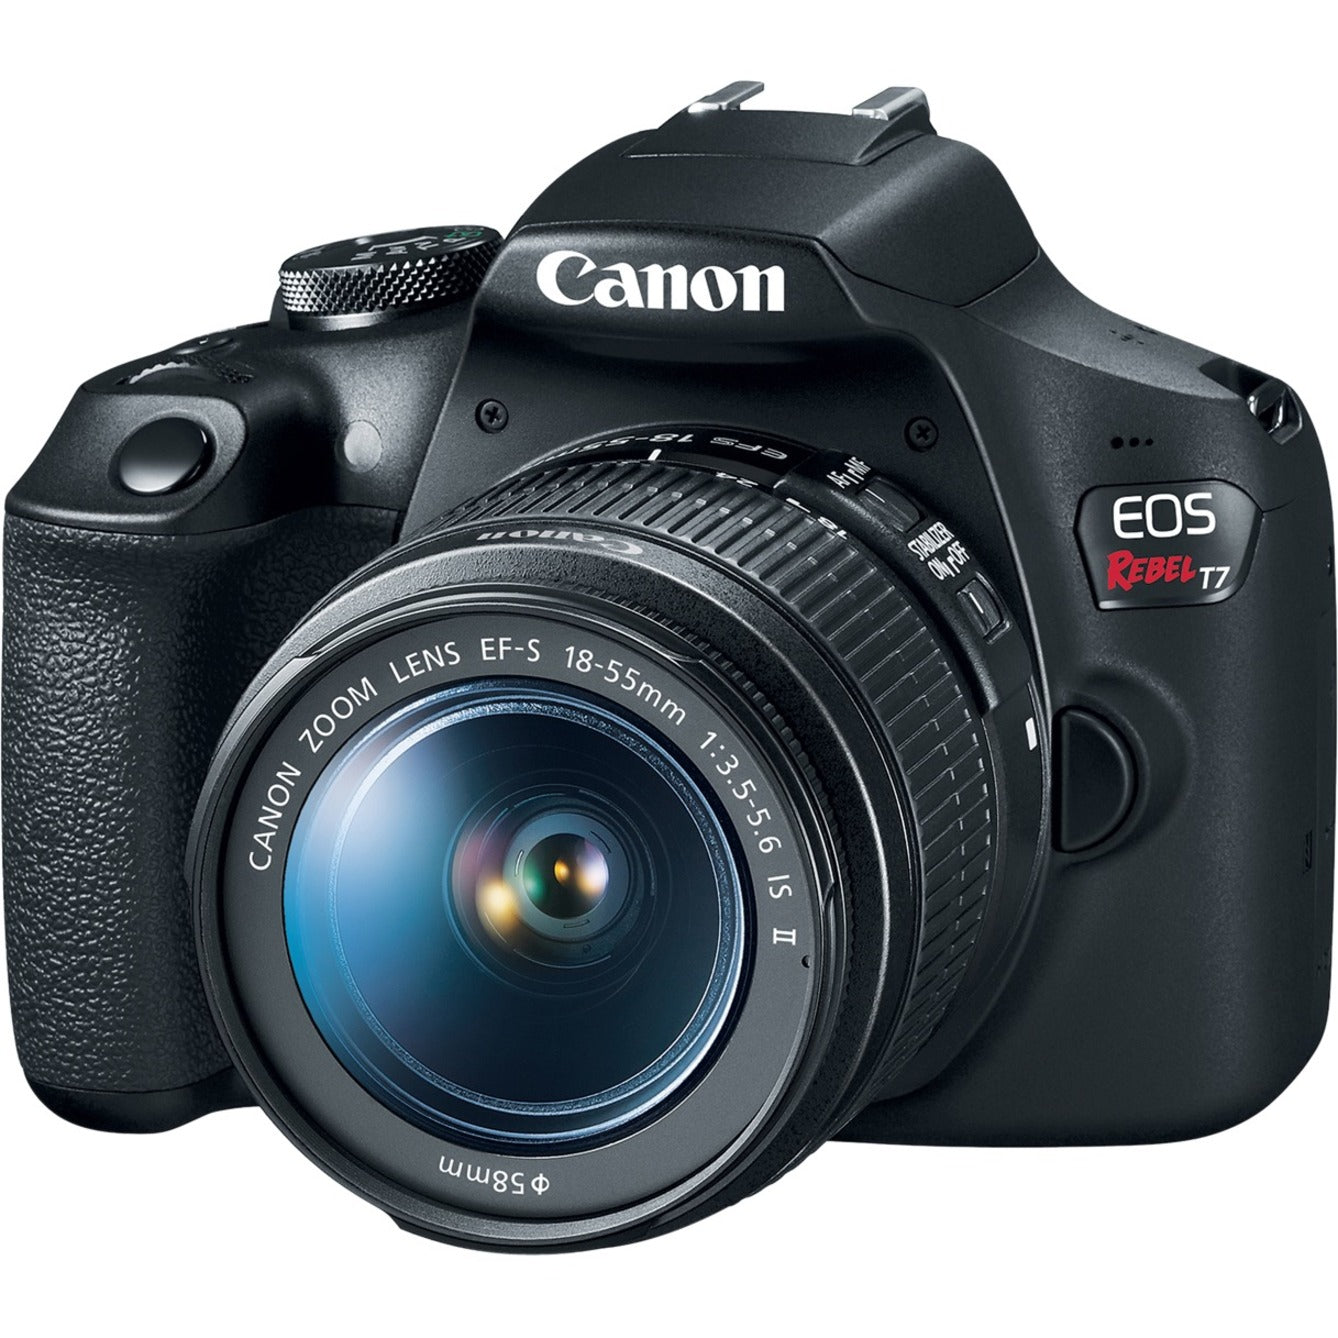 Canon 2727C021 EOS Rebel T7 Digital SLR Camera with Lens, 24.1 Megapixel, 3 LCD, Wireless LAN